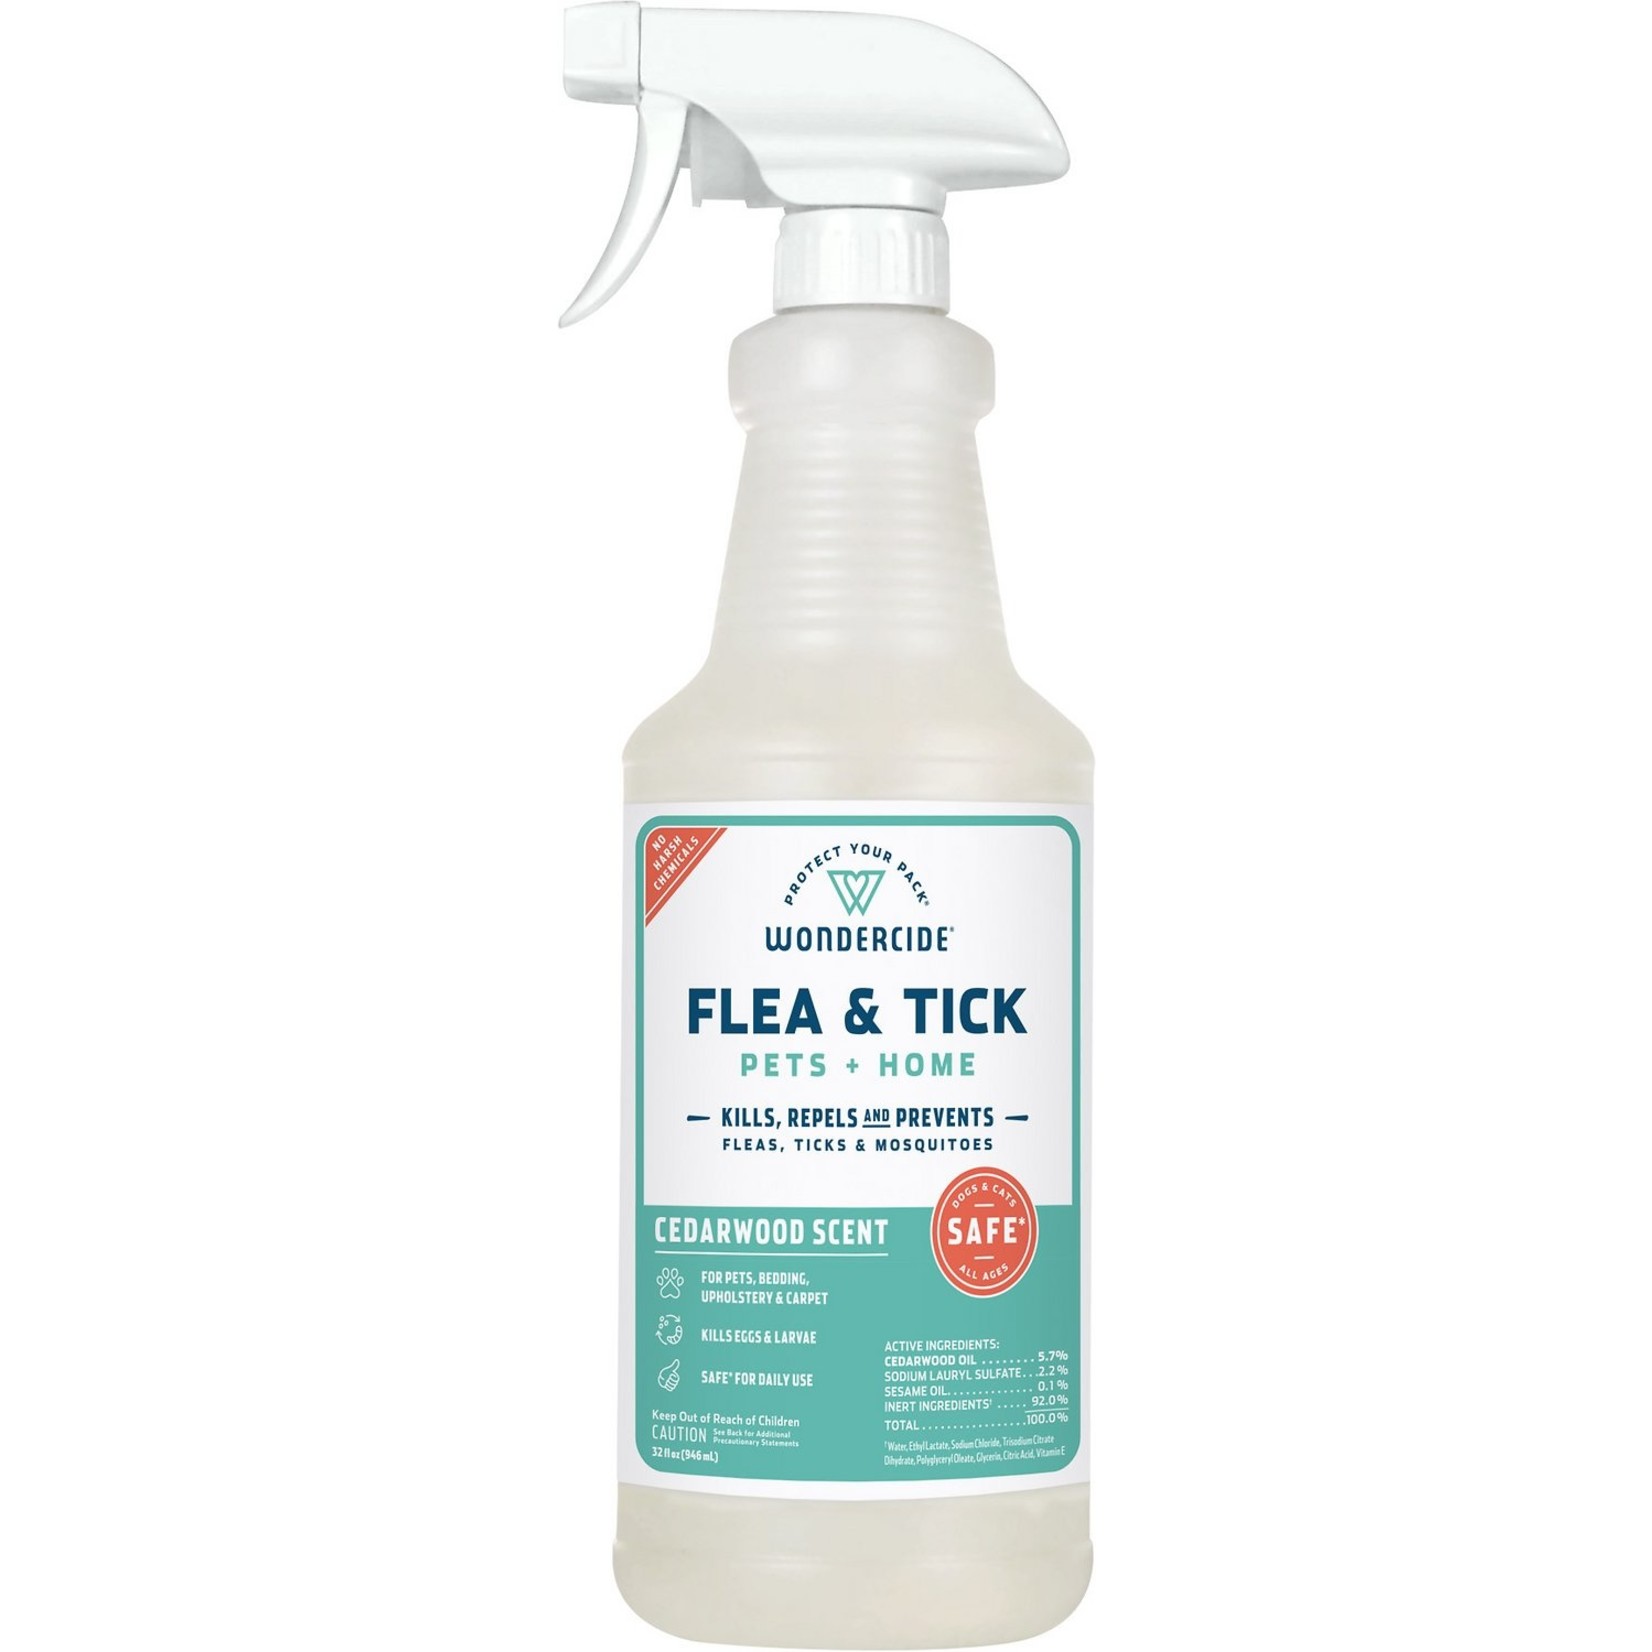 Wondercide Wondercide Flea & Tick Spray for Pets + Home - Cedar Scent